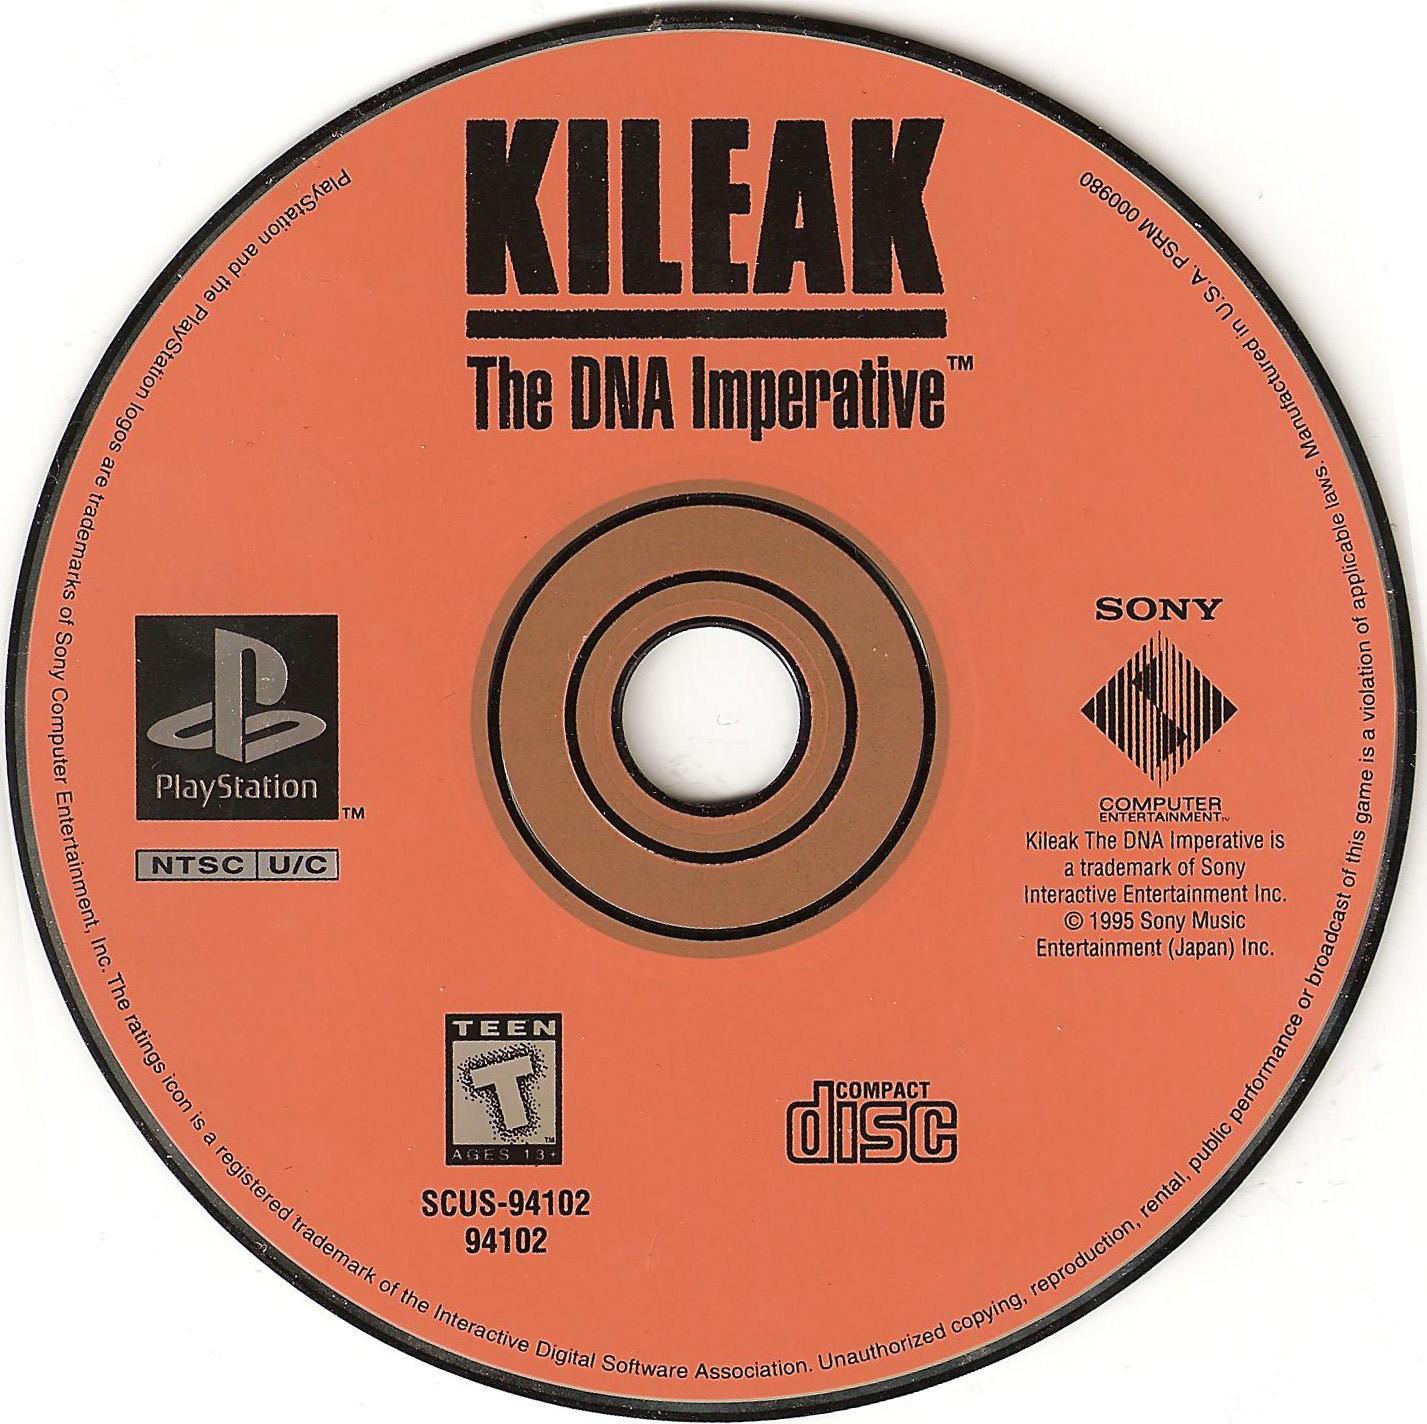 Kileak - The DNA Imperative PSX cover